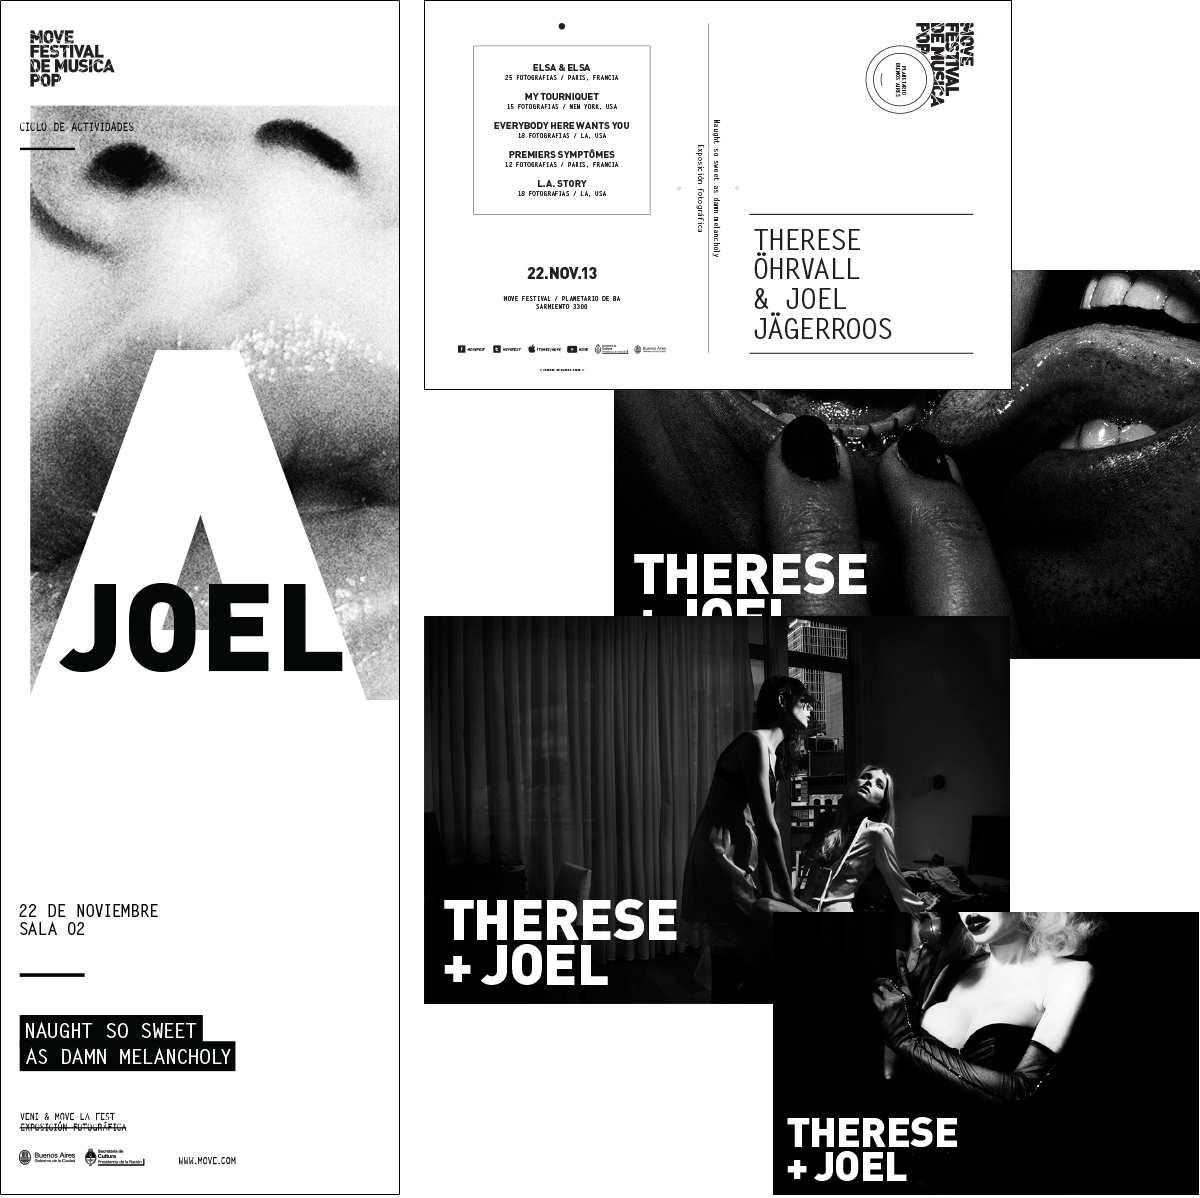 Gabriele uba festival pop move musica final PressBook afiche aficheta flyer seminario taller expo